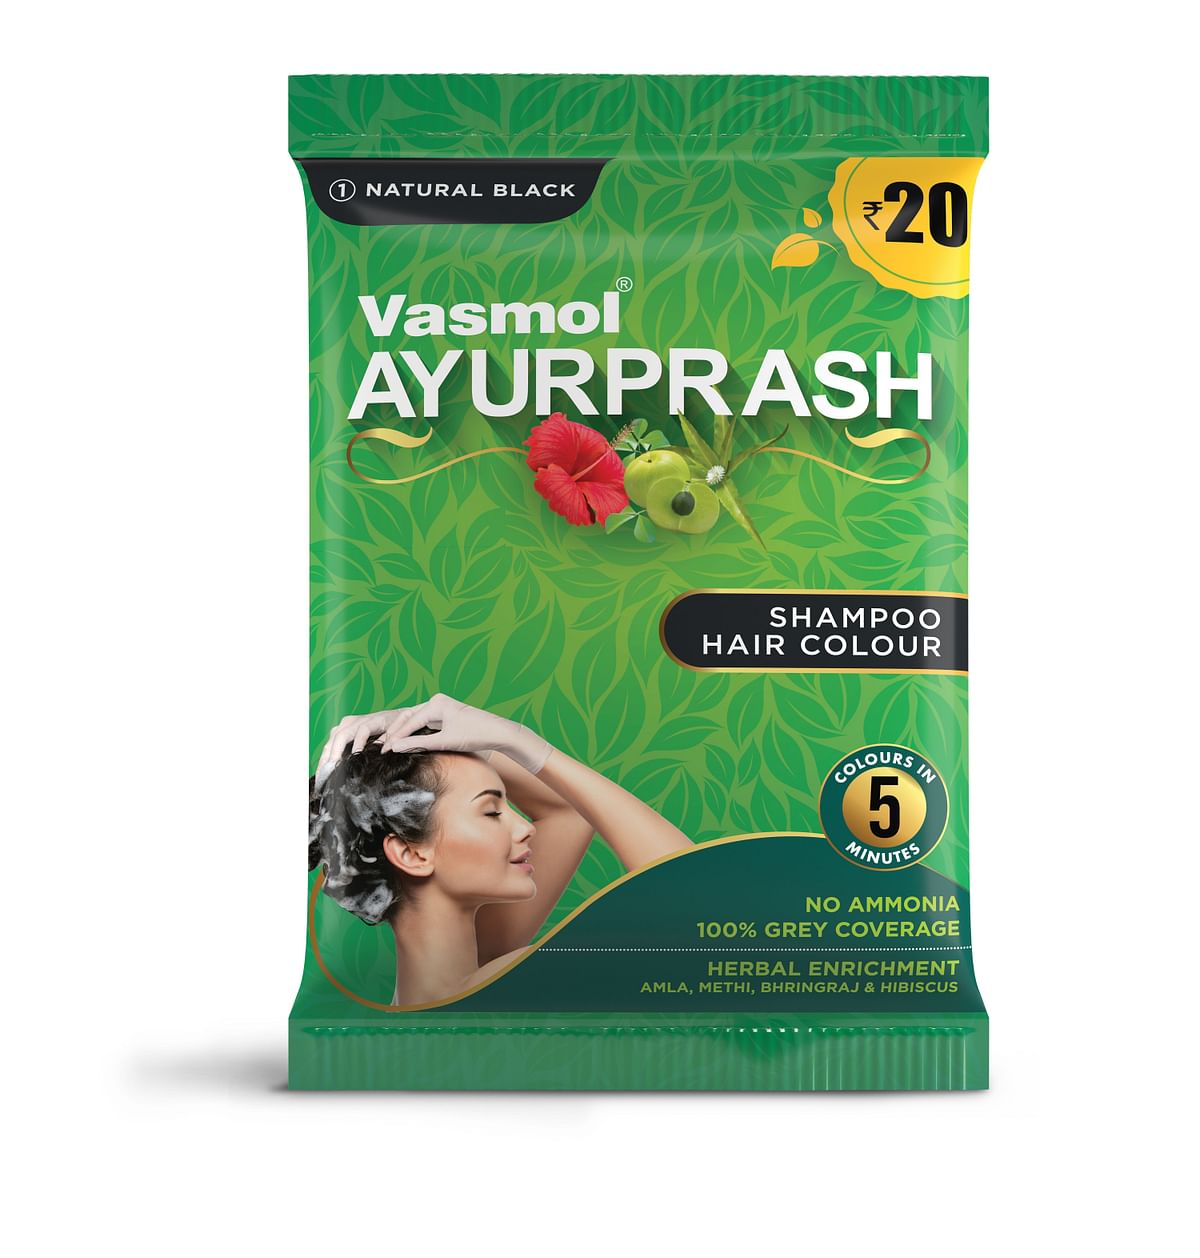 Vasmol advertises shampoo that colours hair…